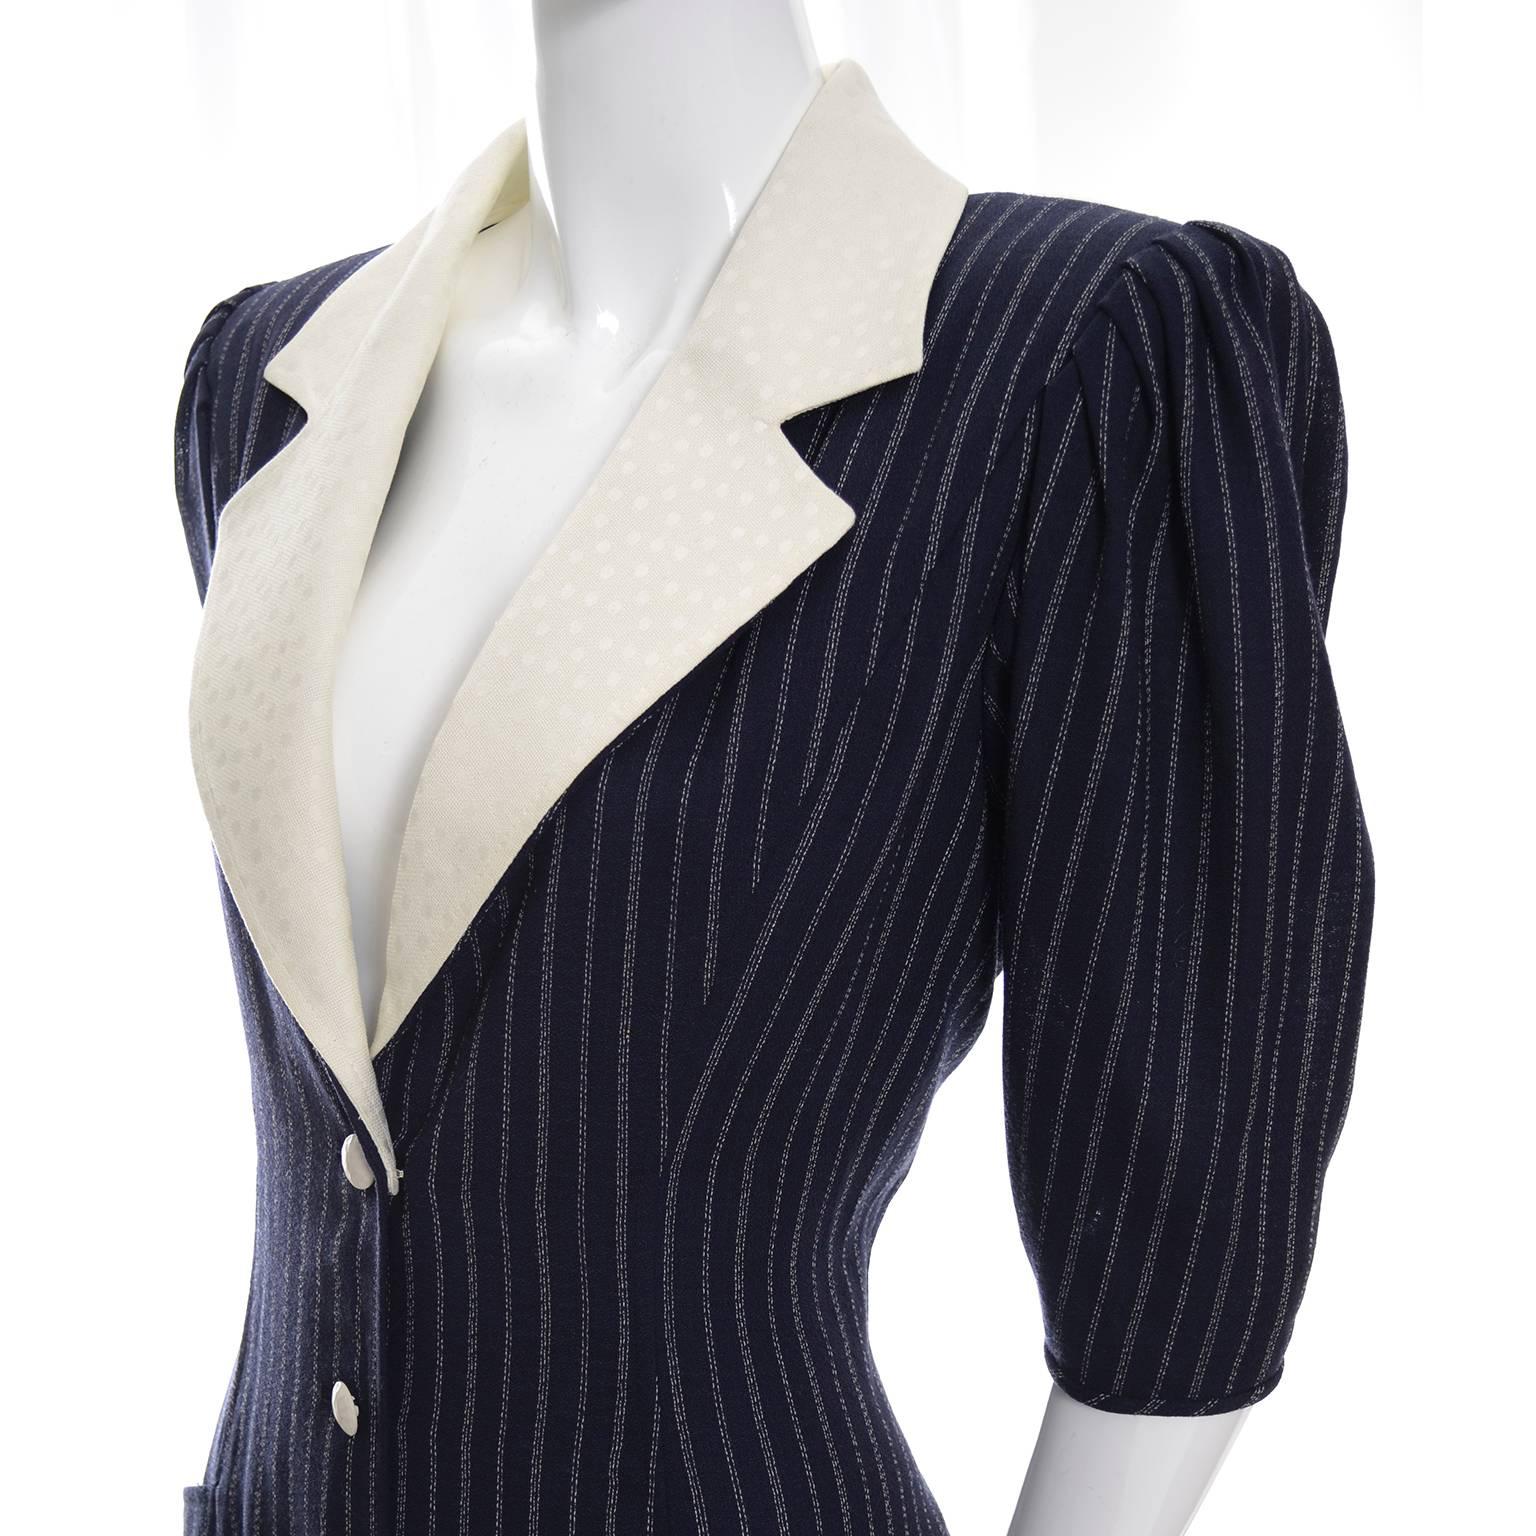 Emanuel Ungaro Parallele Vintage Dress in Navy Blue & White Wool Crepe  1